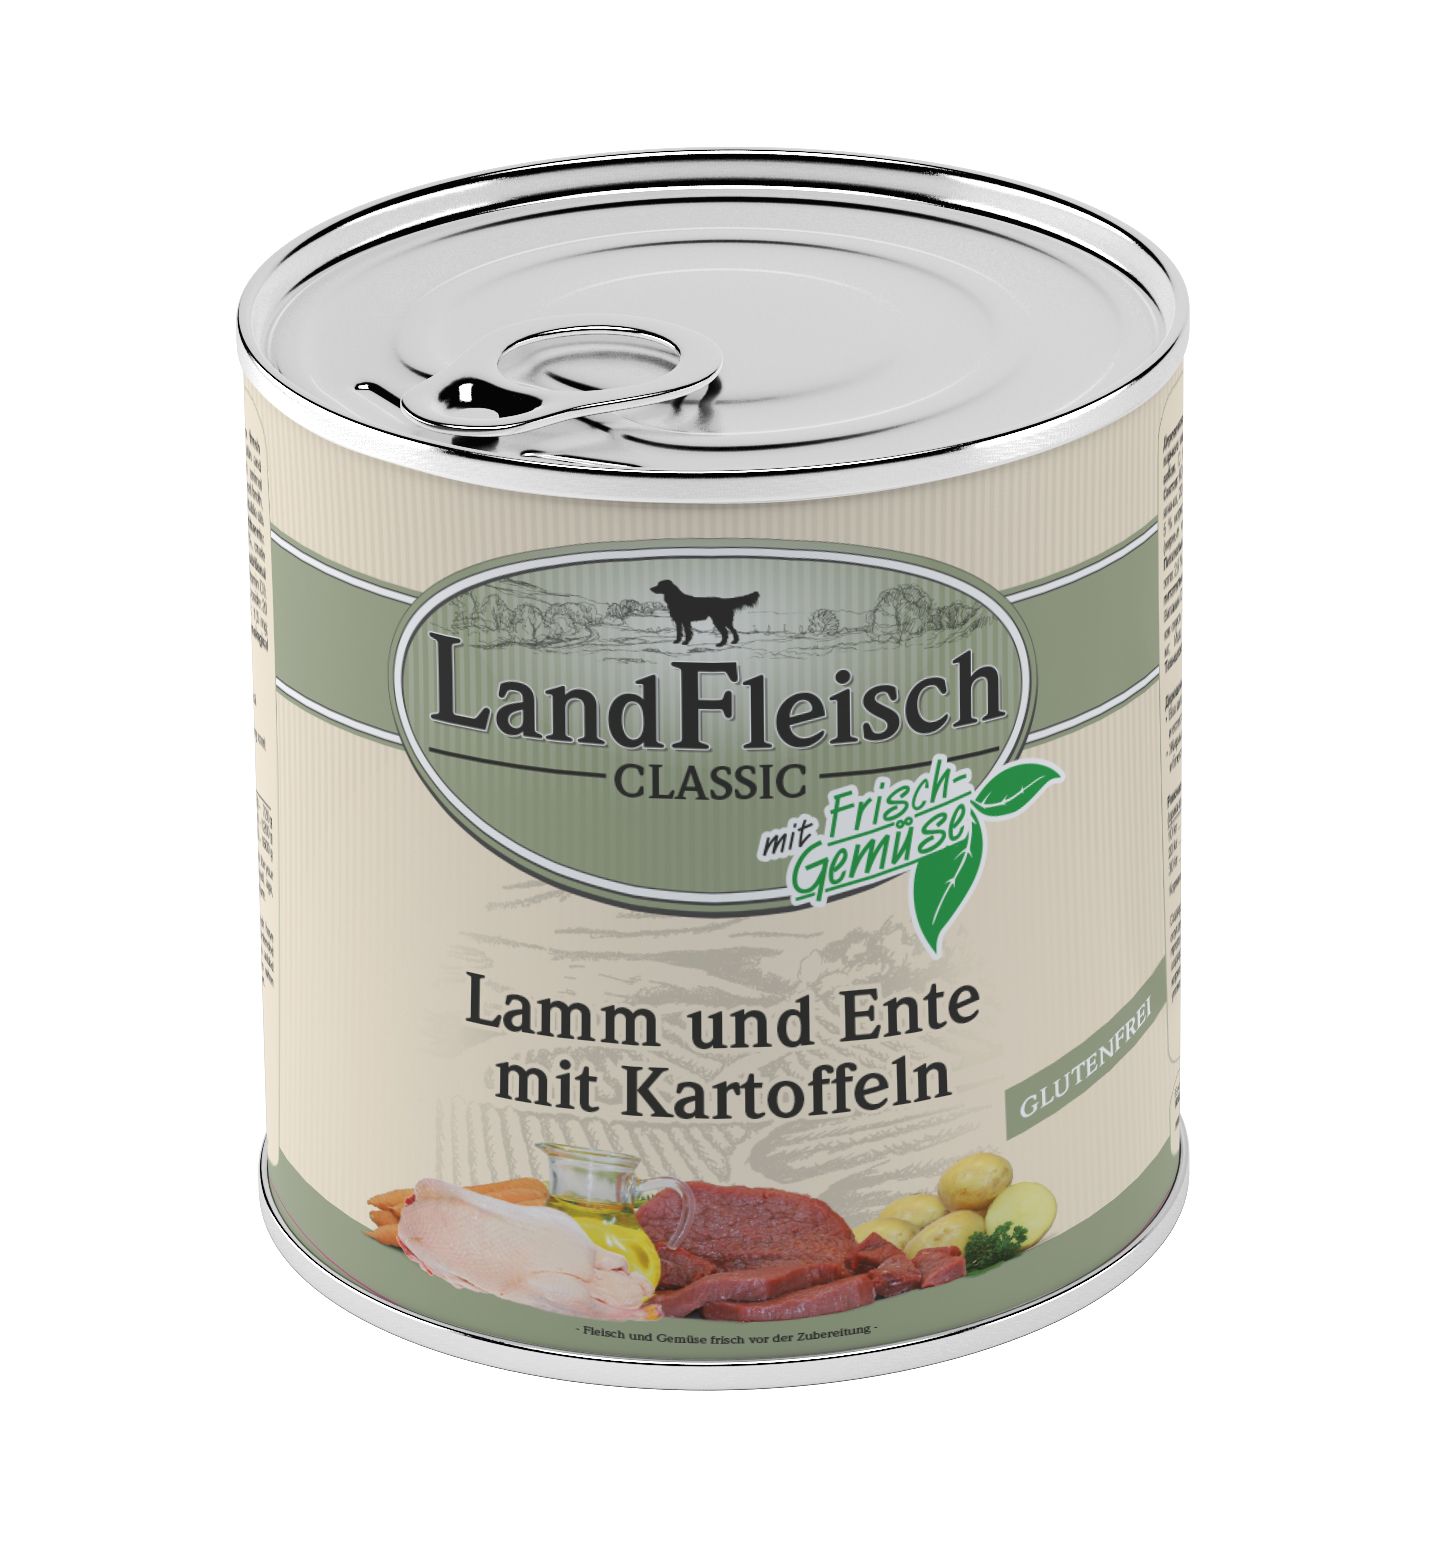 LandFleisch Classic Lamm & Ente & Kartoffeln 800g